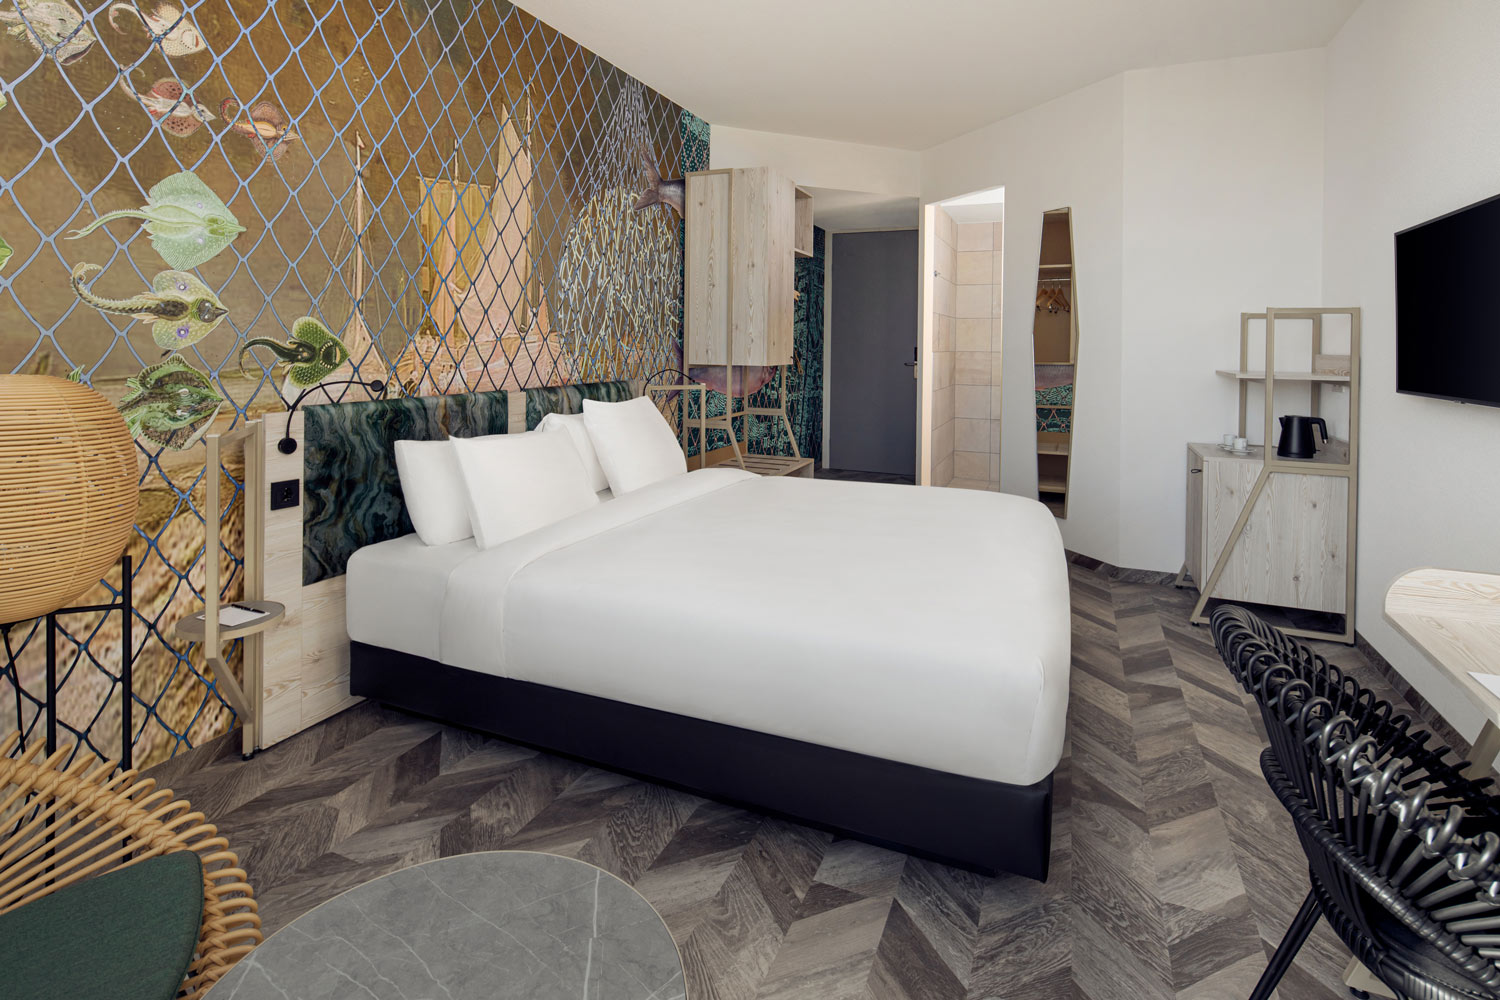 Inntel Hotels - Marina Beach - Hotel room